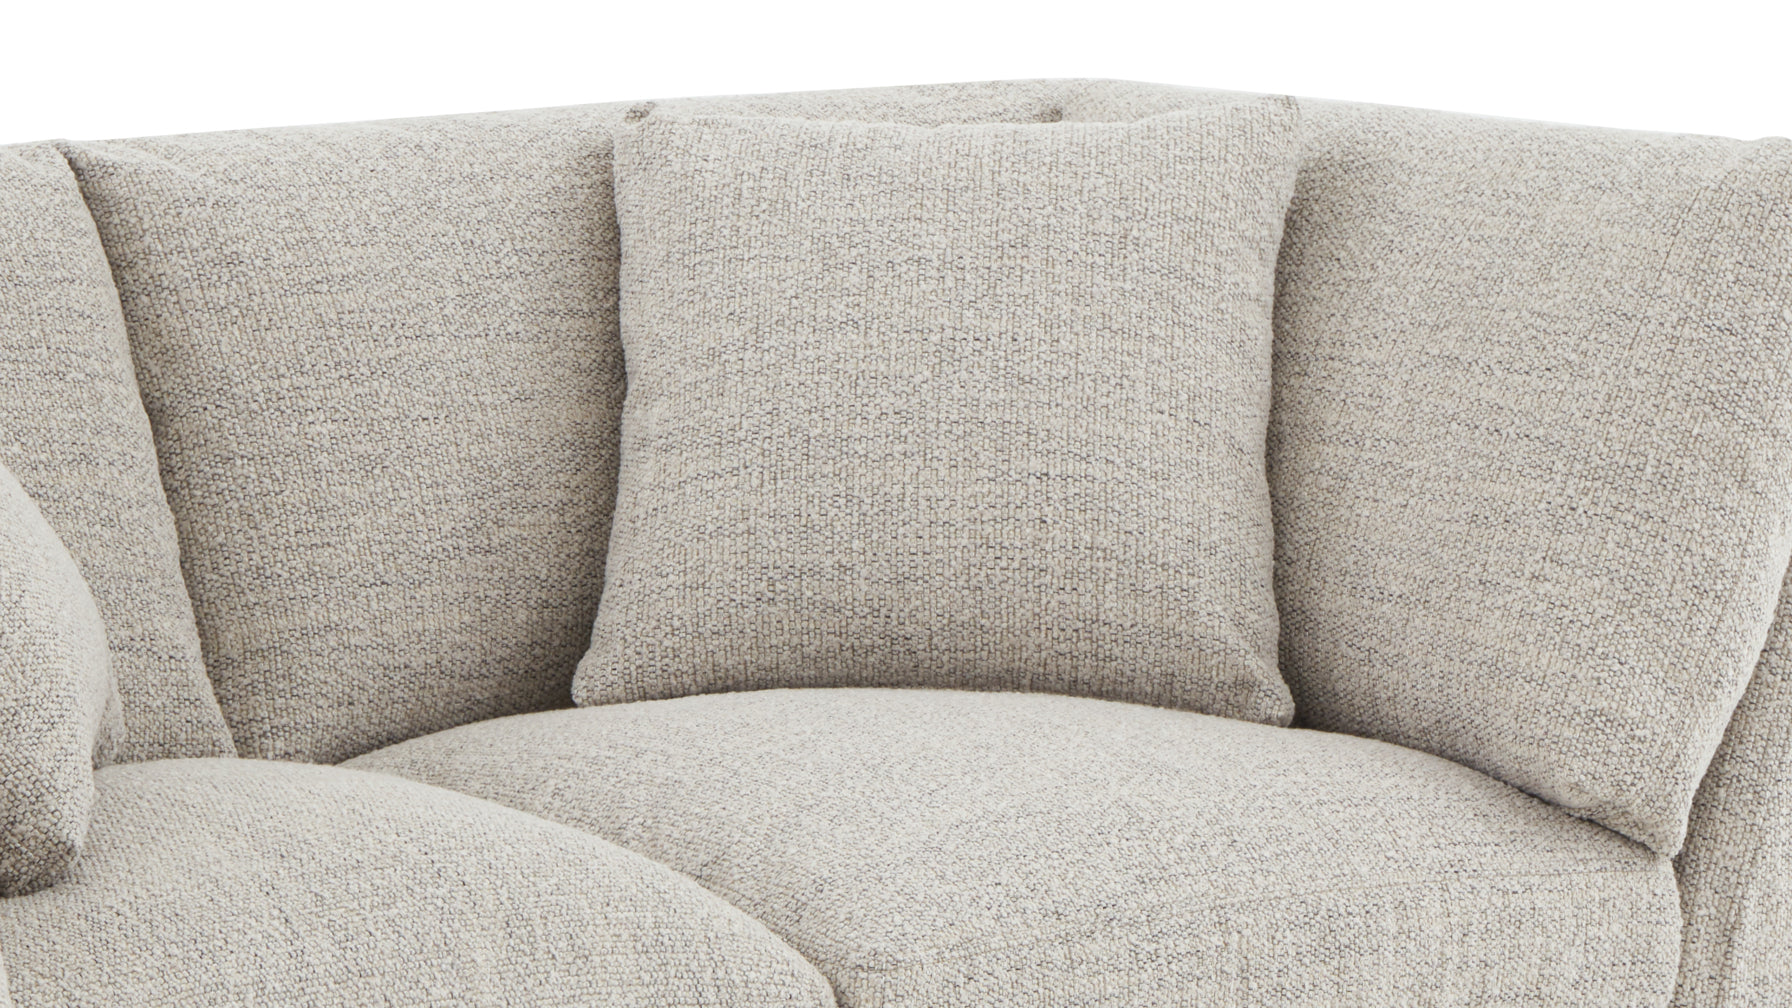 Get Together™ 3-Piece Modular Sofa, Standard, Oatmeal - Image 8